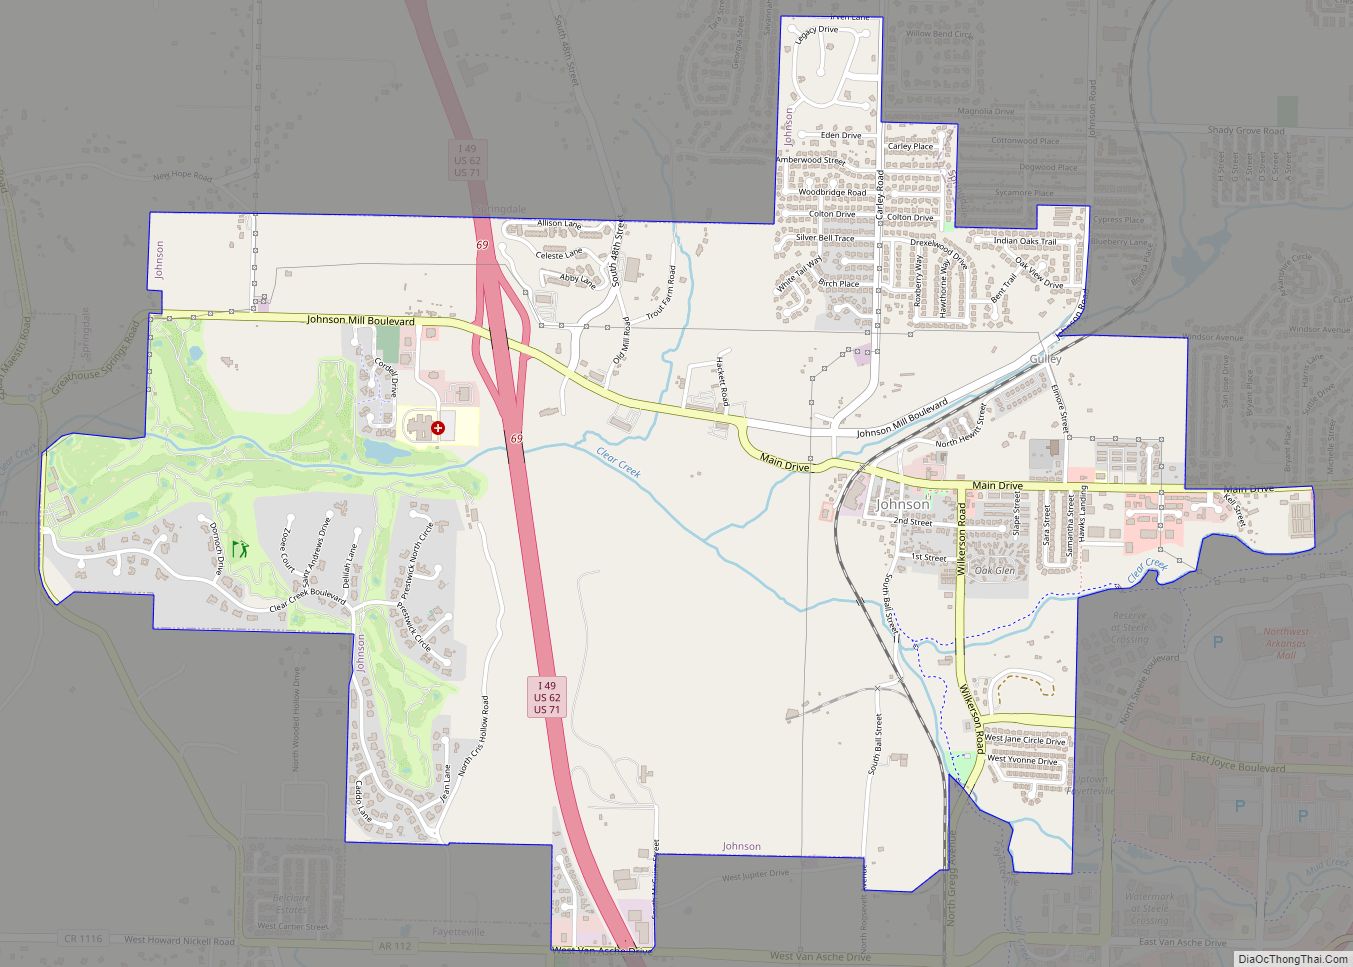 Map of Johnson city